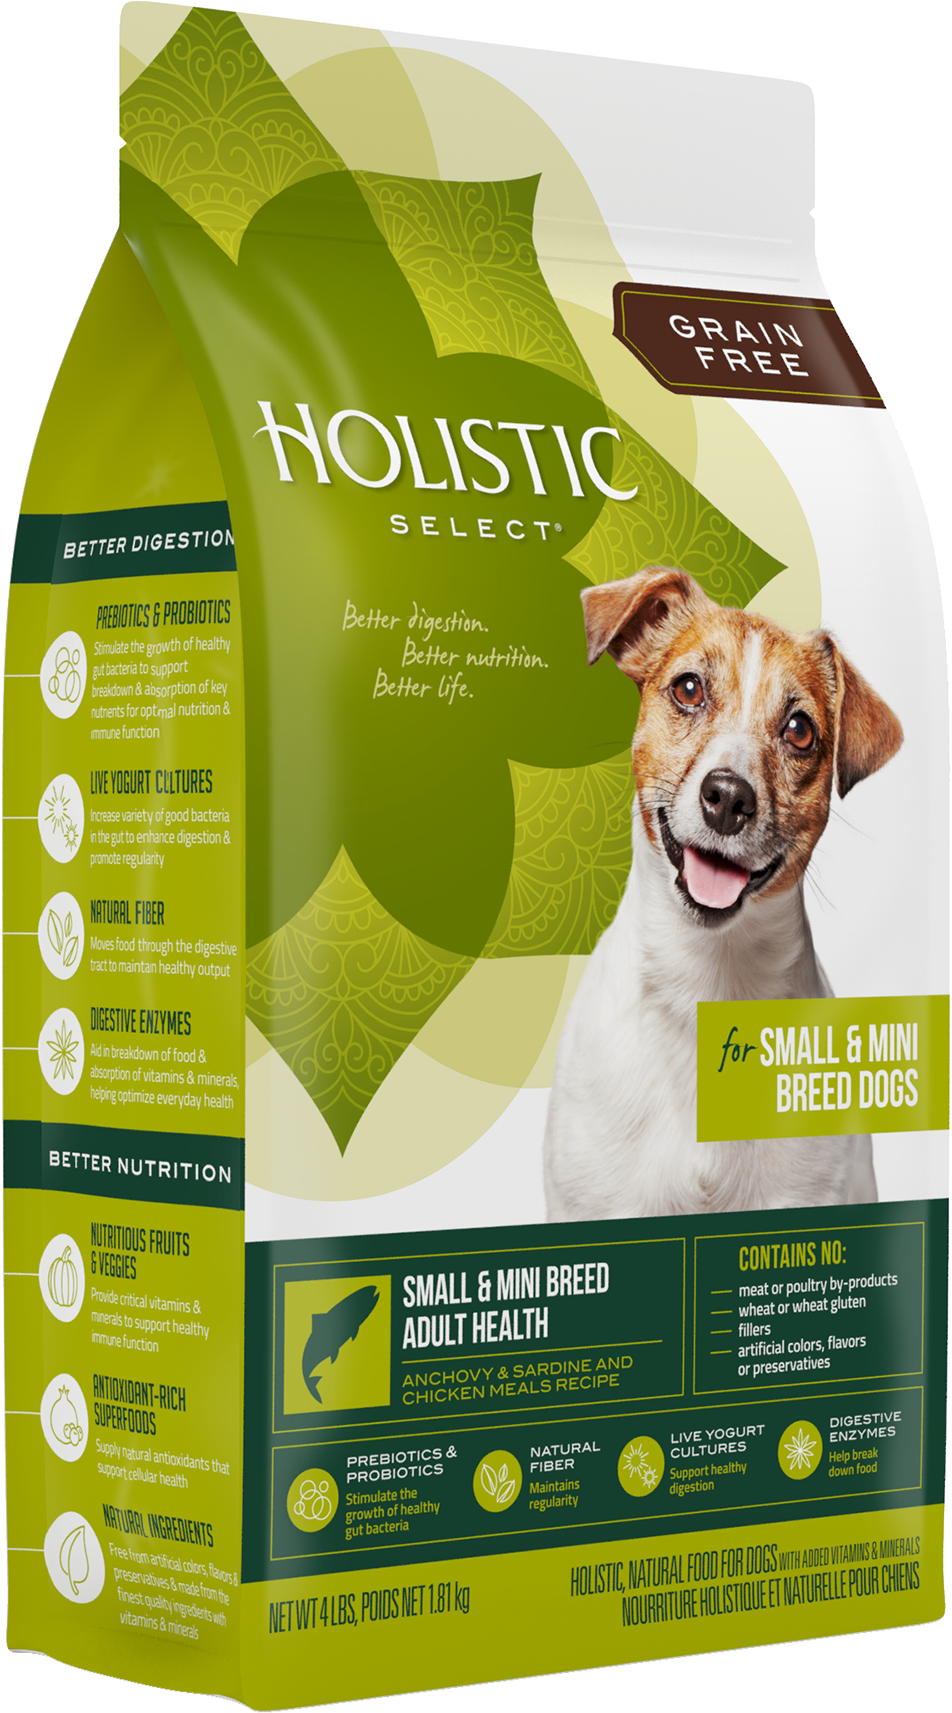 Holistic Select Grain Free Small Breed Adult Dog Kibble